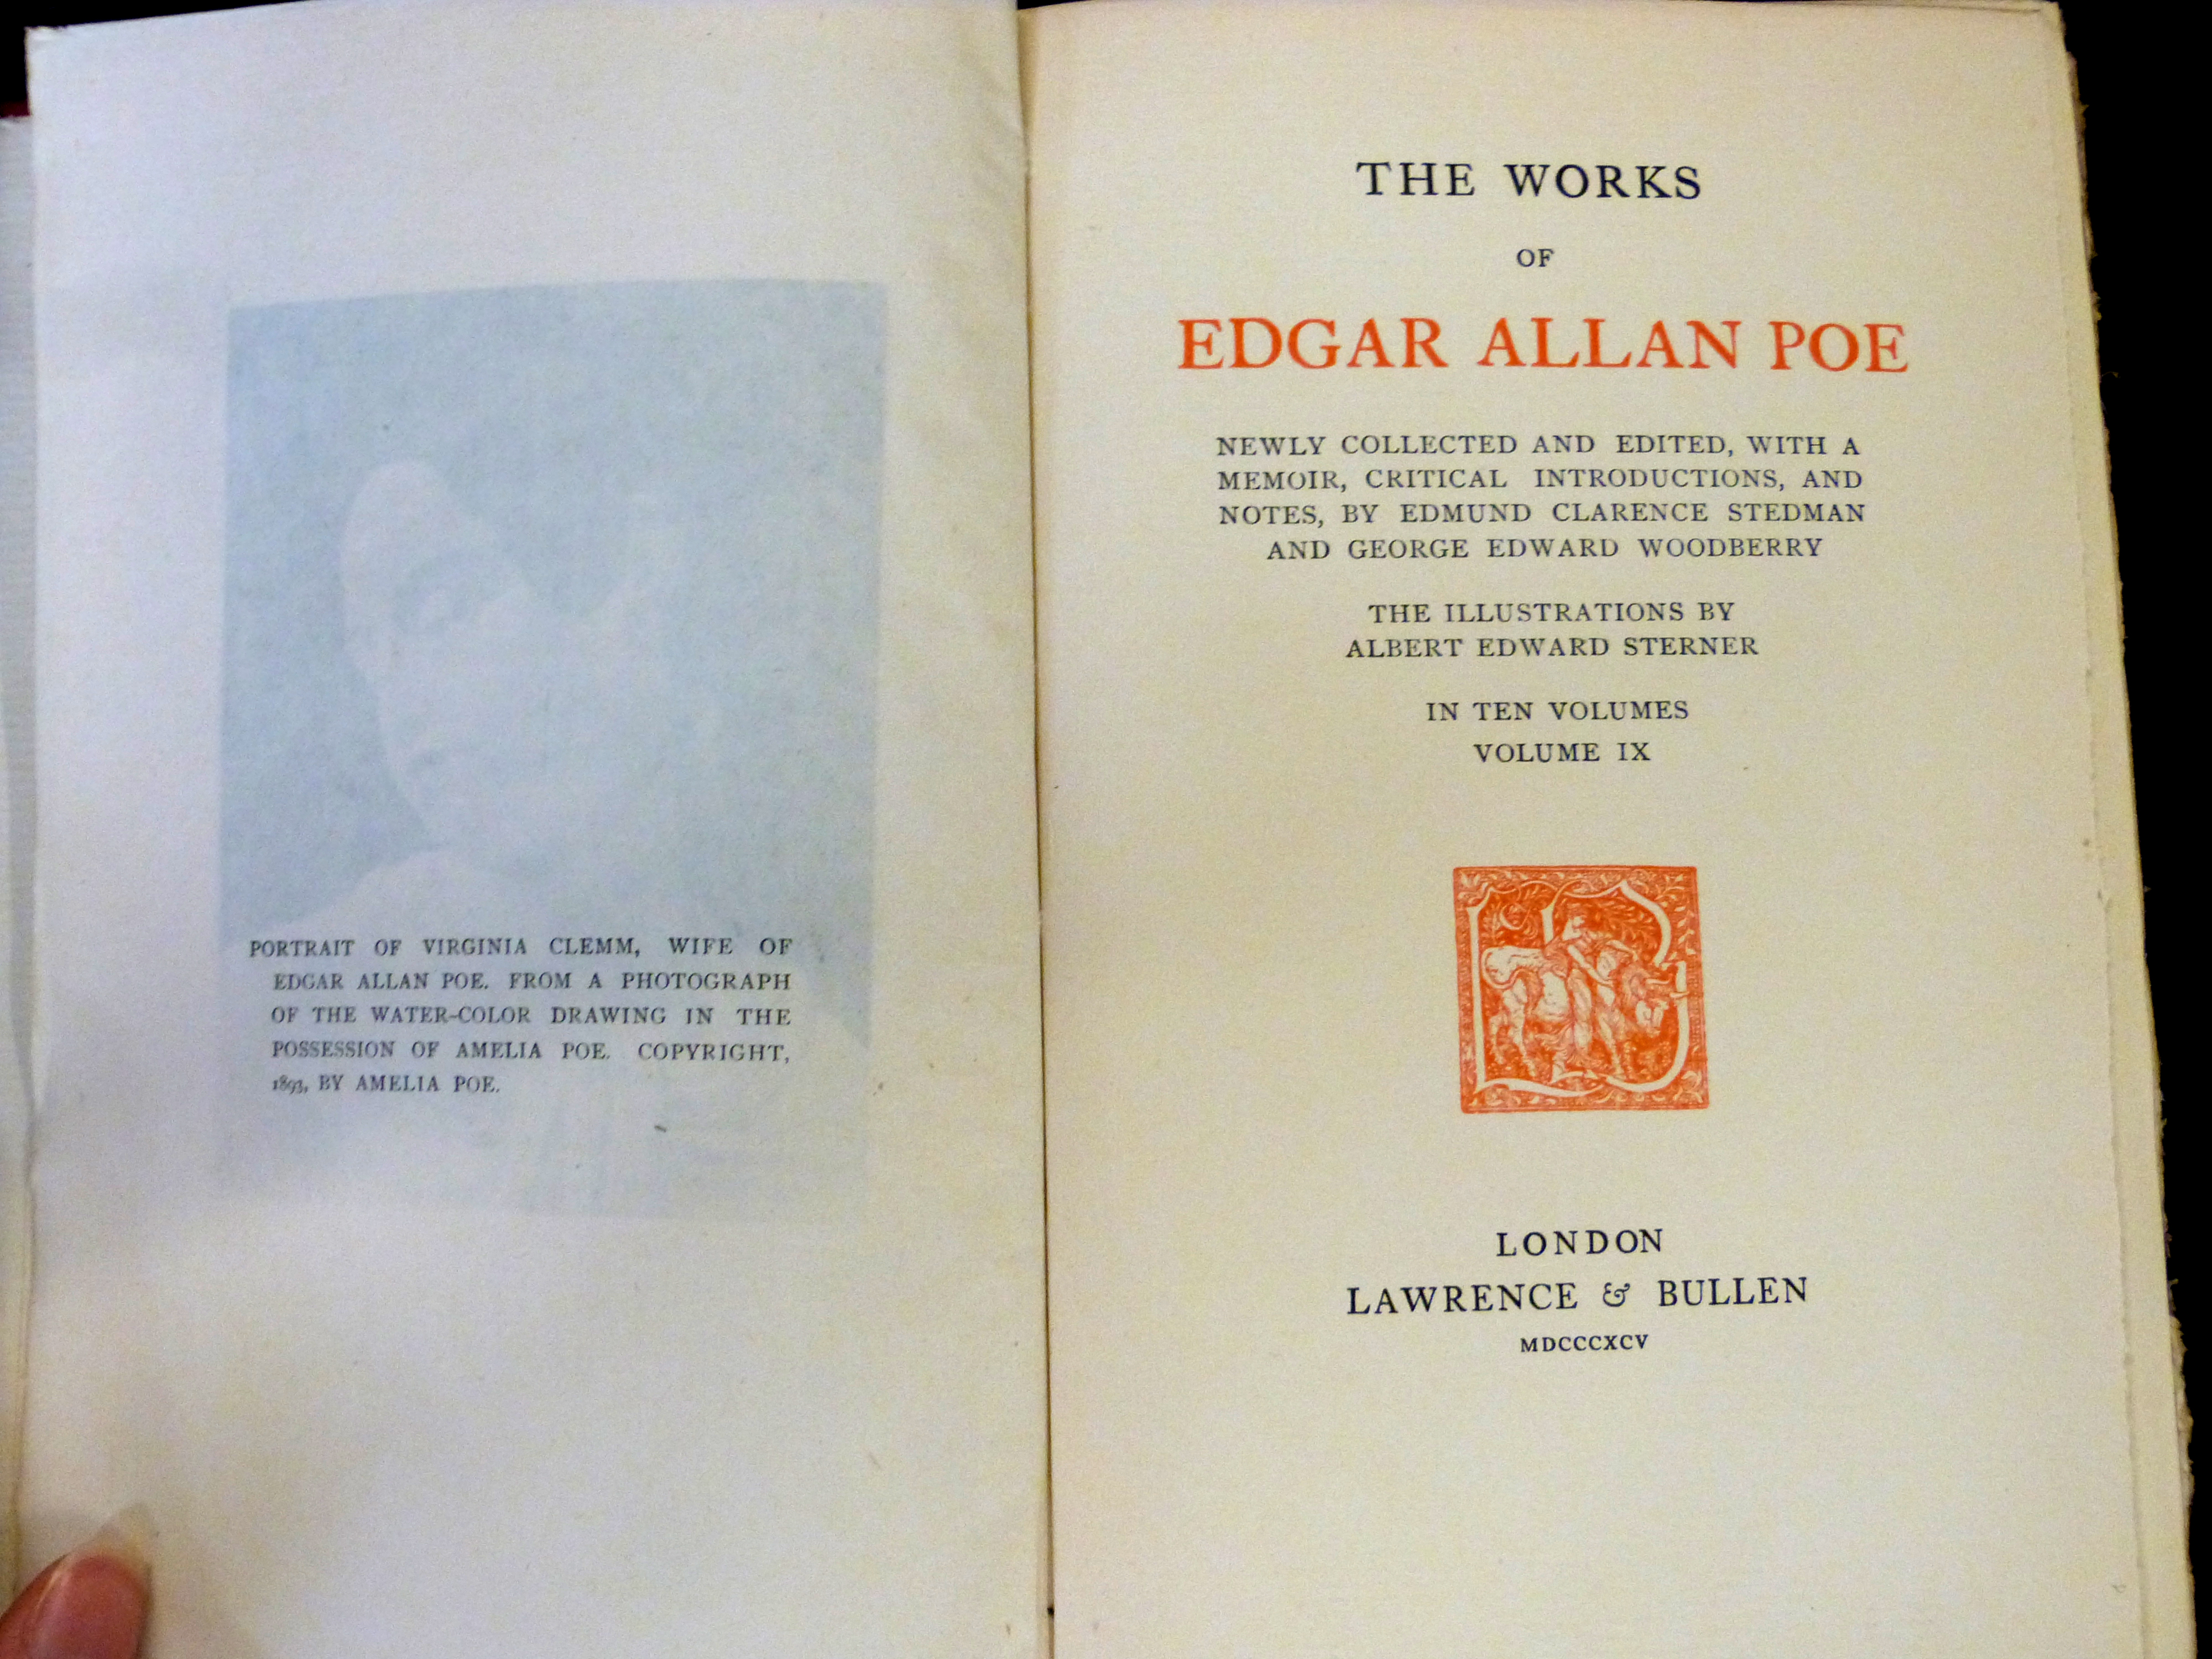 EDGAR ALLAN POE: THE WORKS, ill Albert Edward Sterner, London, Lawrence & Bullen, 1895, vols 1-2,